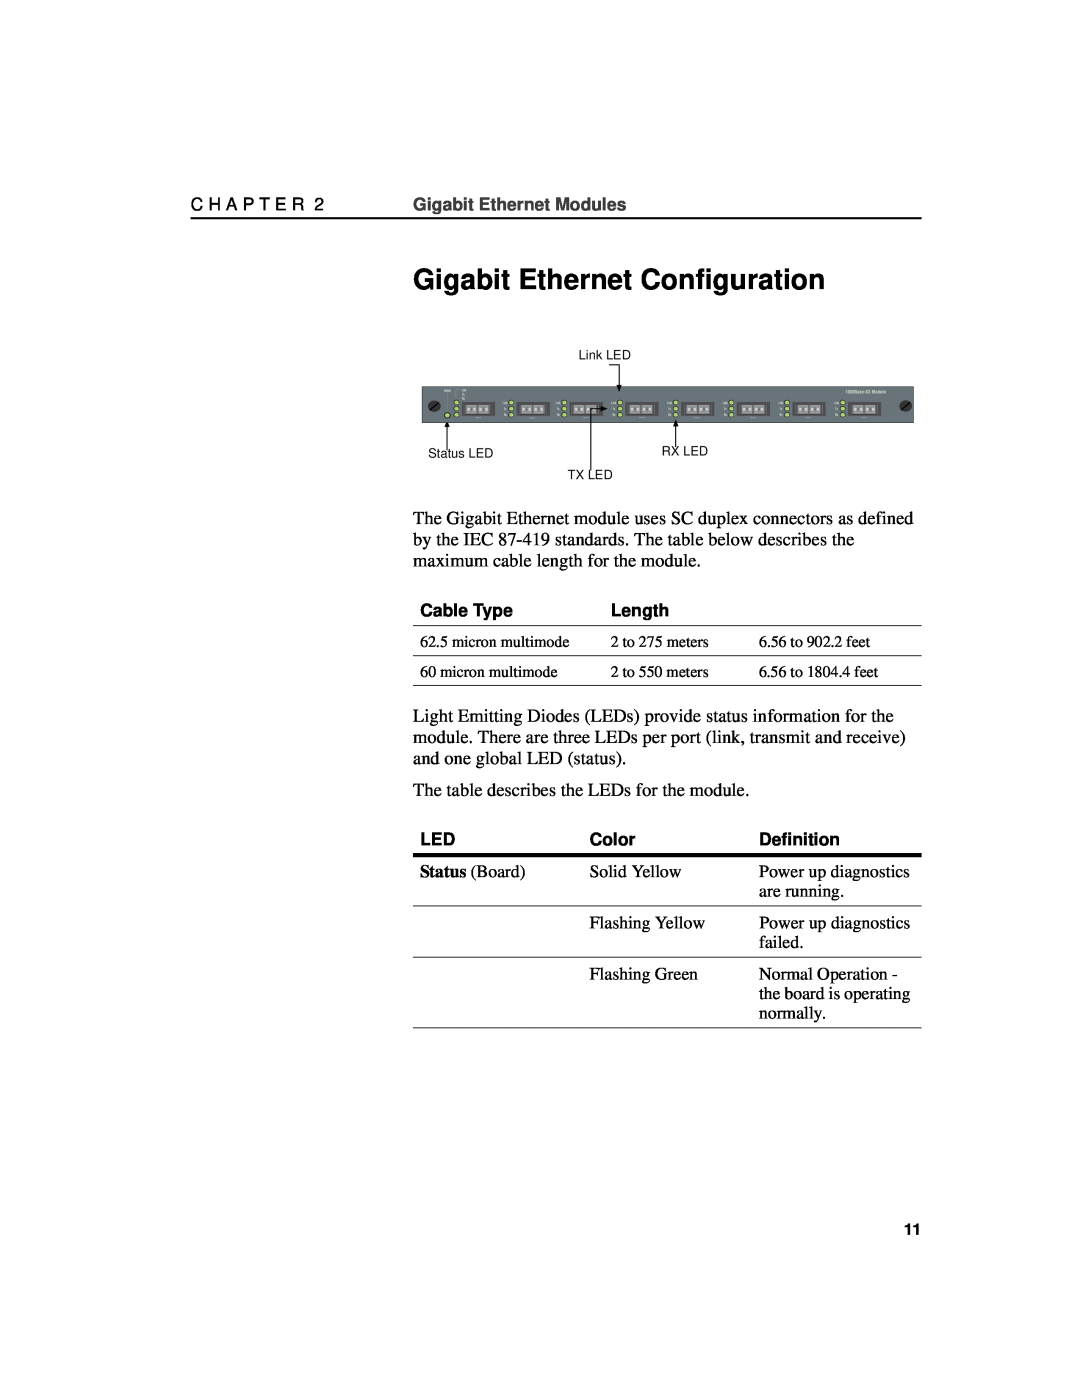 Intel A21721-001 manual Gigabit Ethernet Configuration 